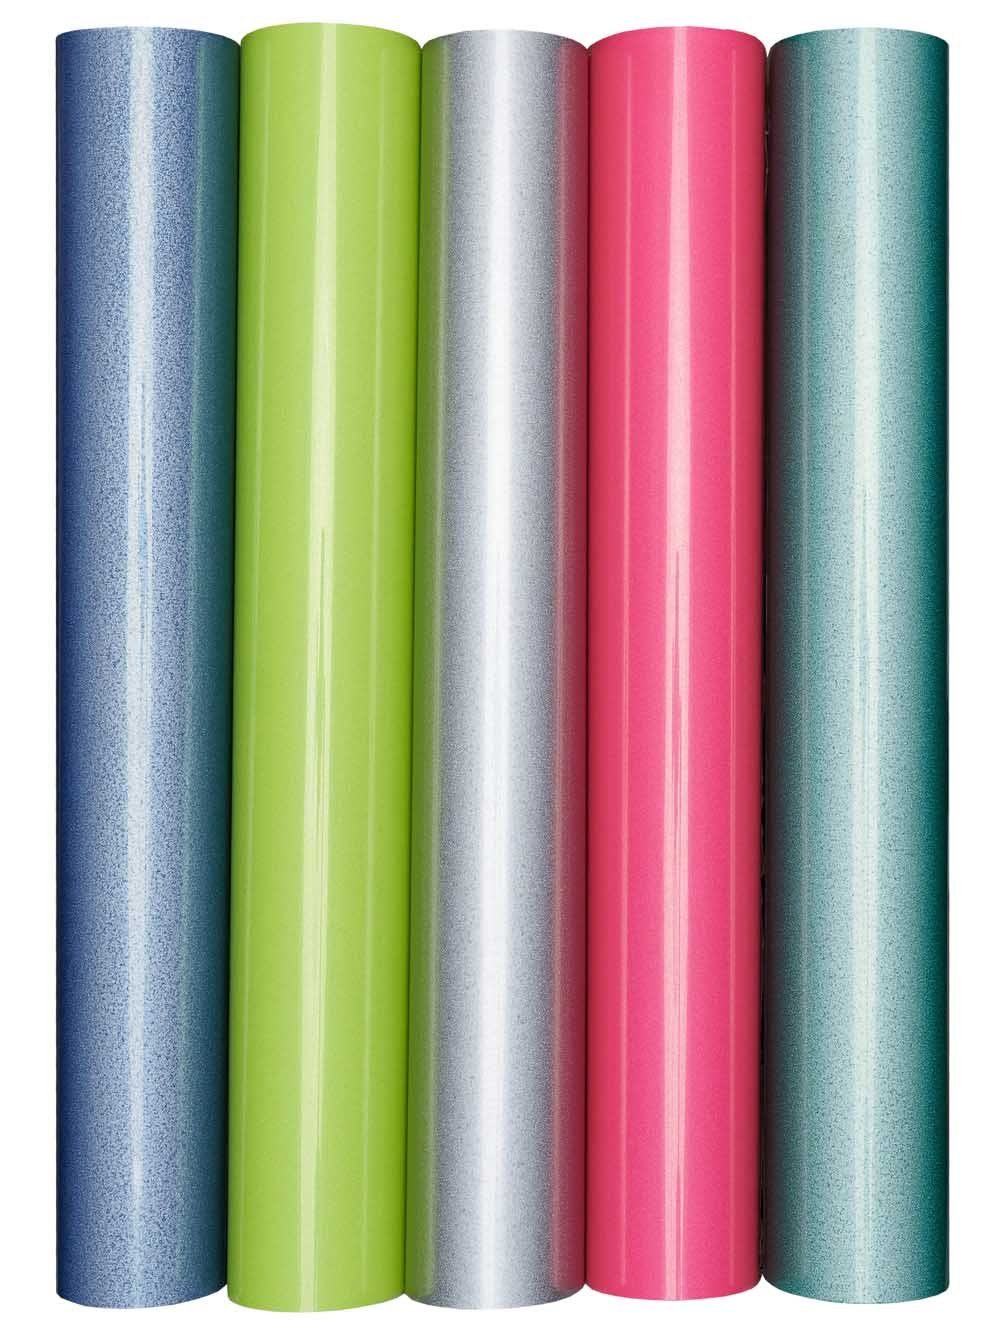 Hilltop Transparentpapier Reflektierende Transferfolie, Textilfolie, mehrfarbig, 30x20 Reflective Multicolor cm